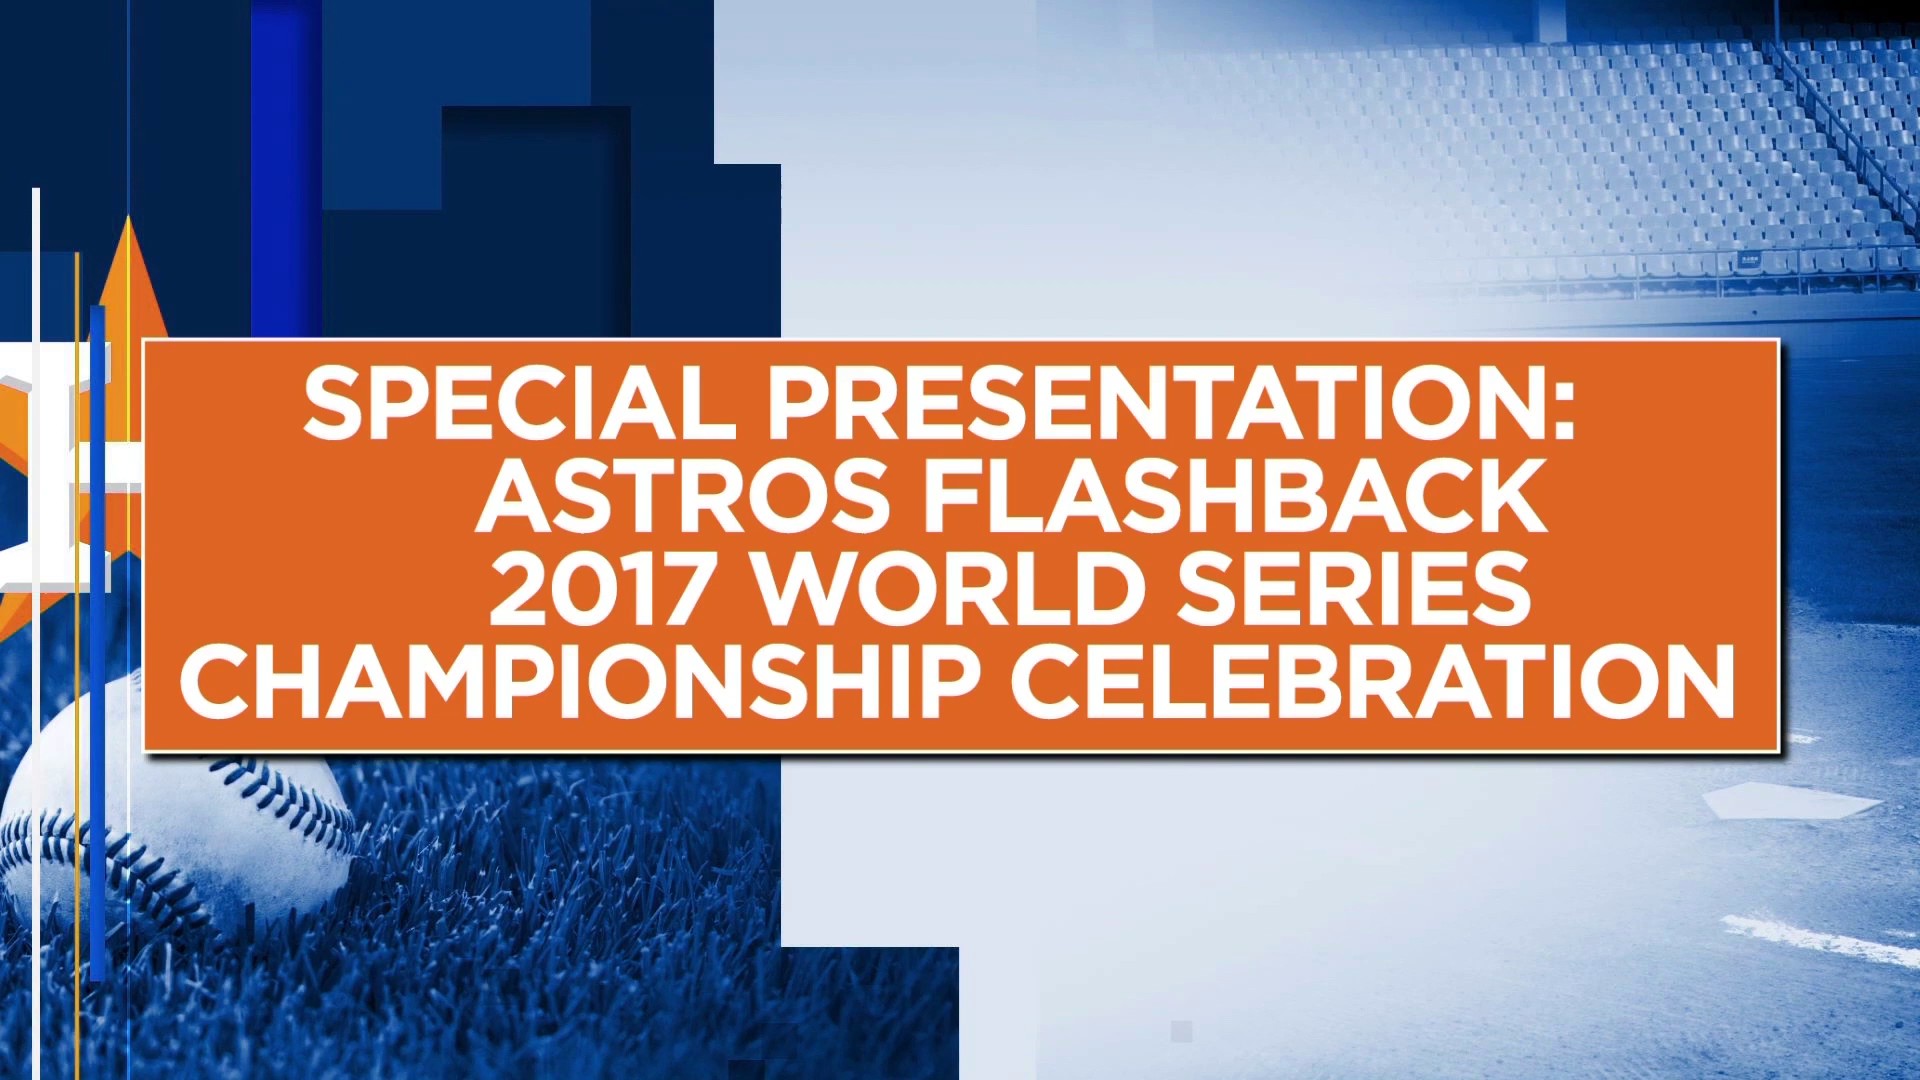 Houston Astros - Join us for Flashback Fridays all season long